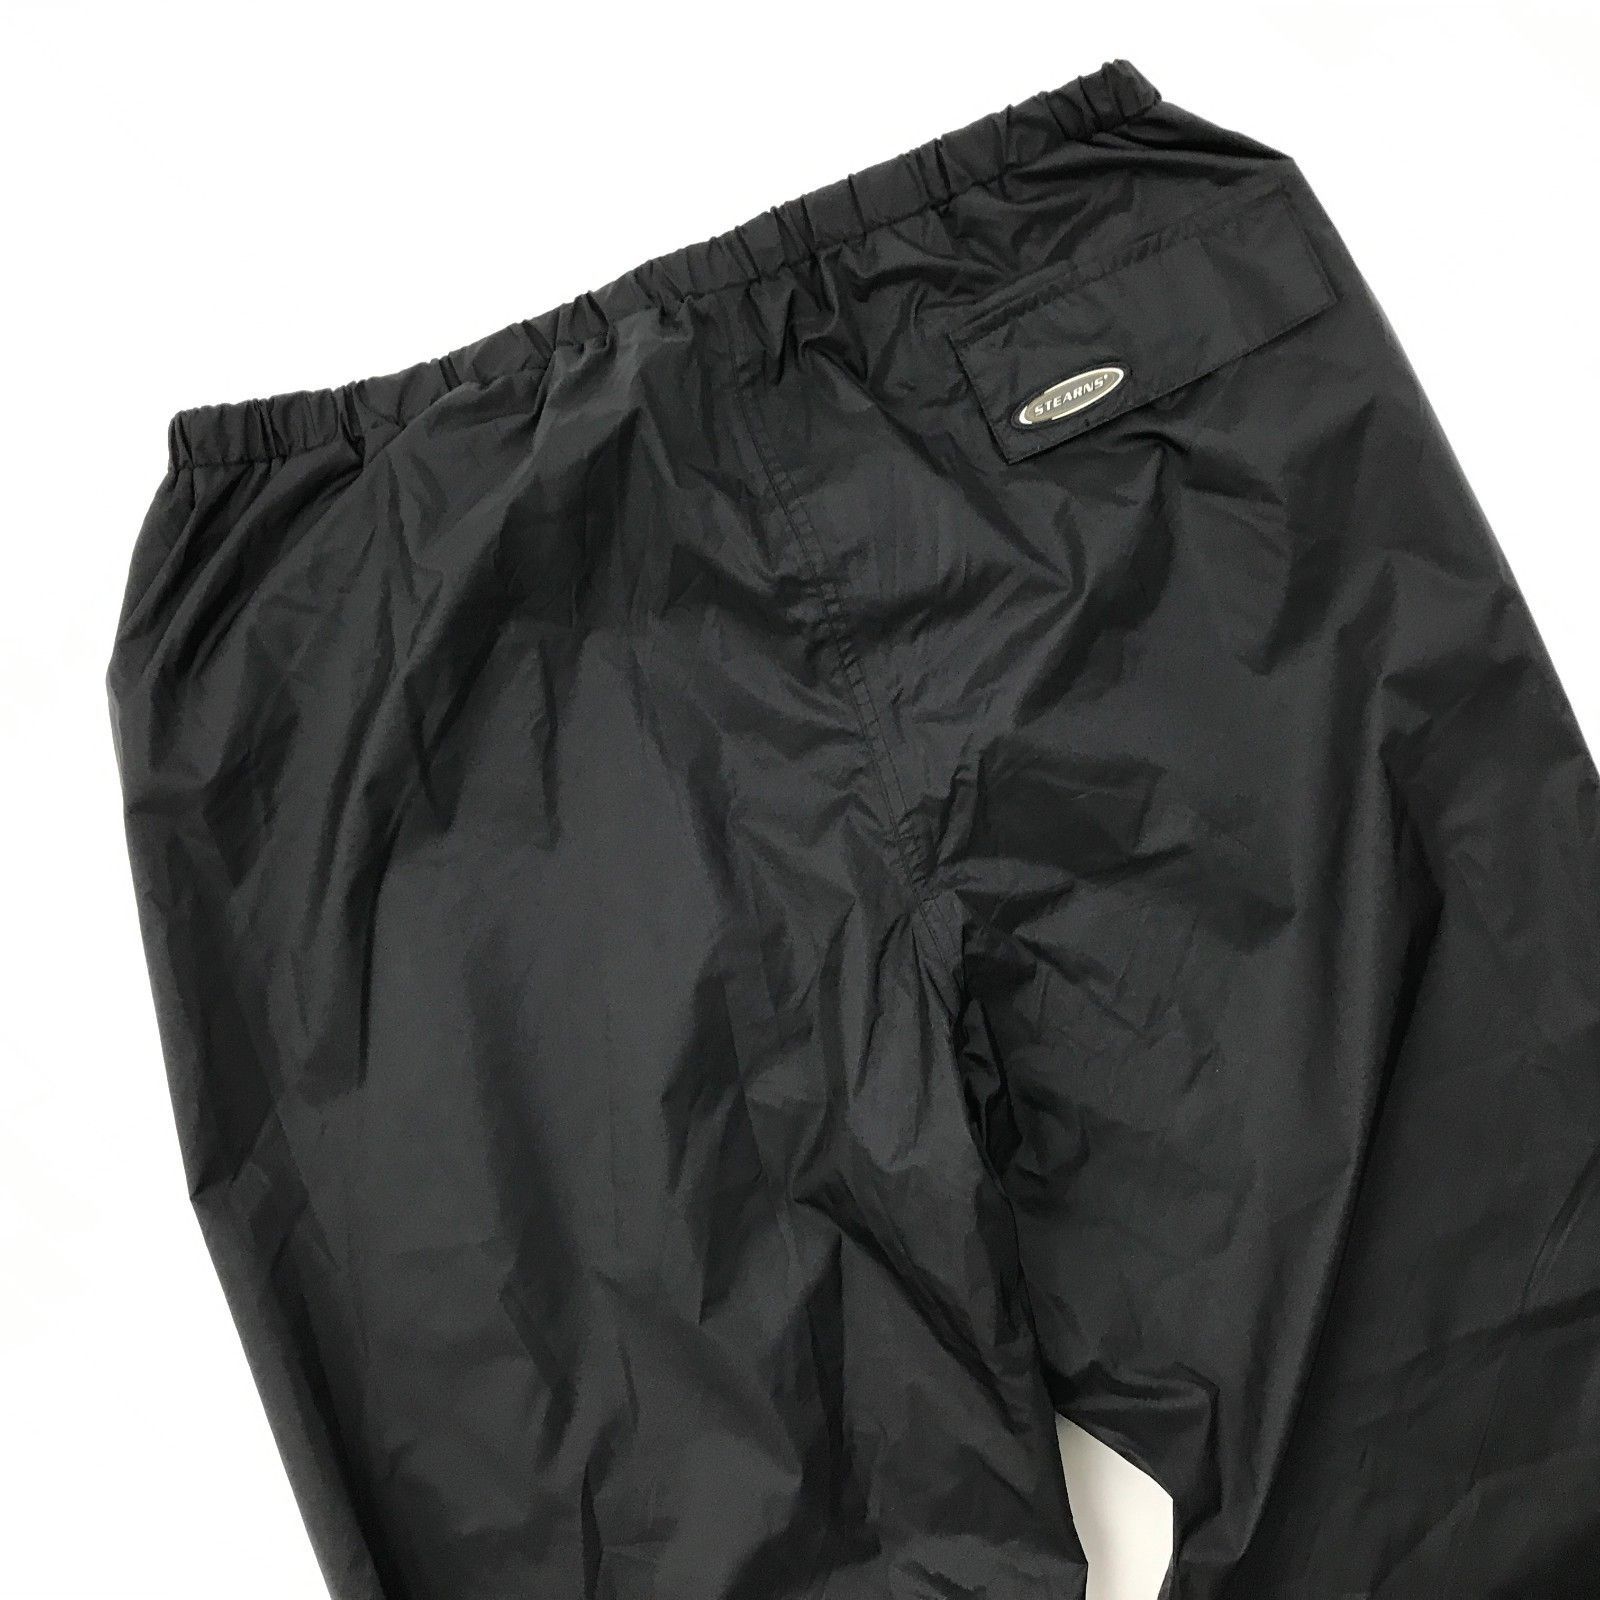 STEARNS DRY WEAR Joggers Size Extra Large Black Waterproof Pants NYLON ...